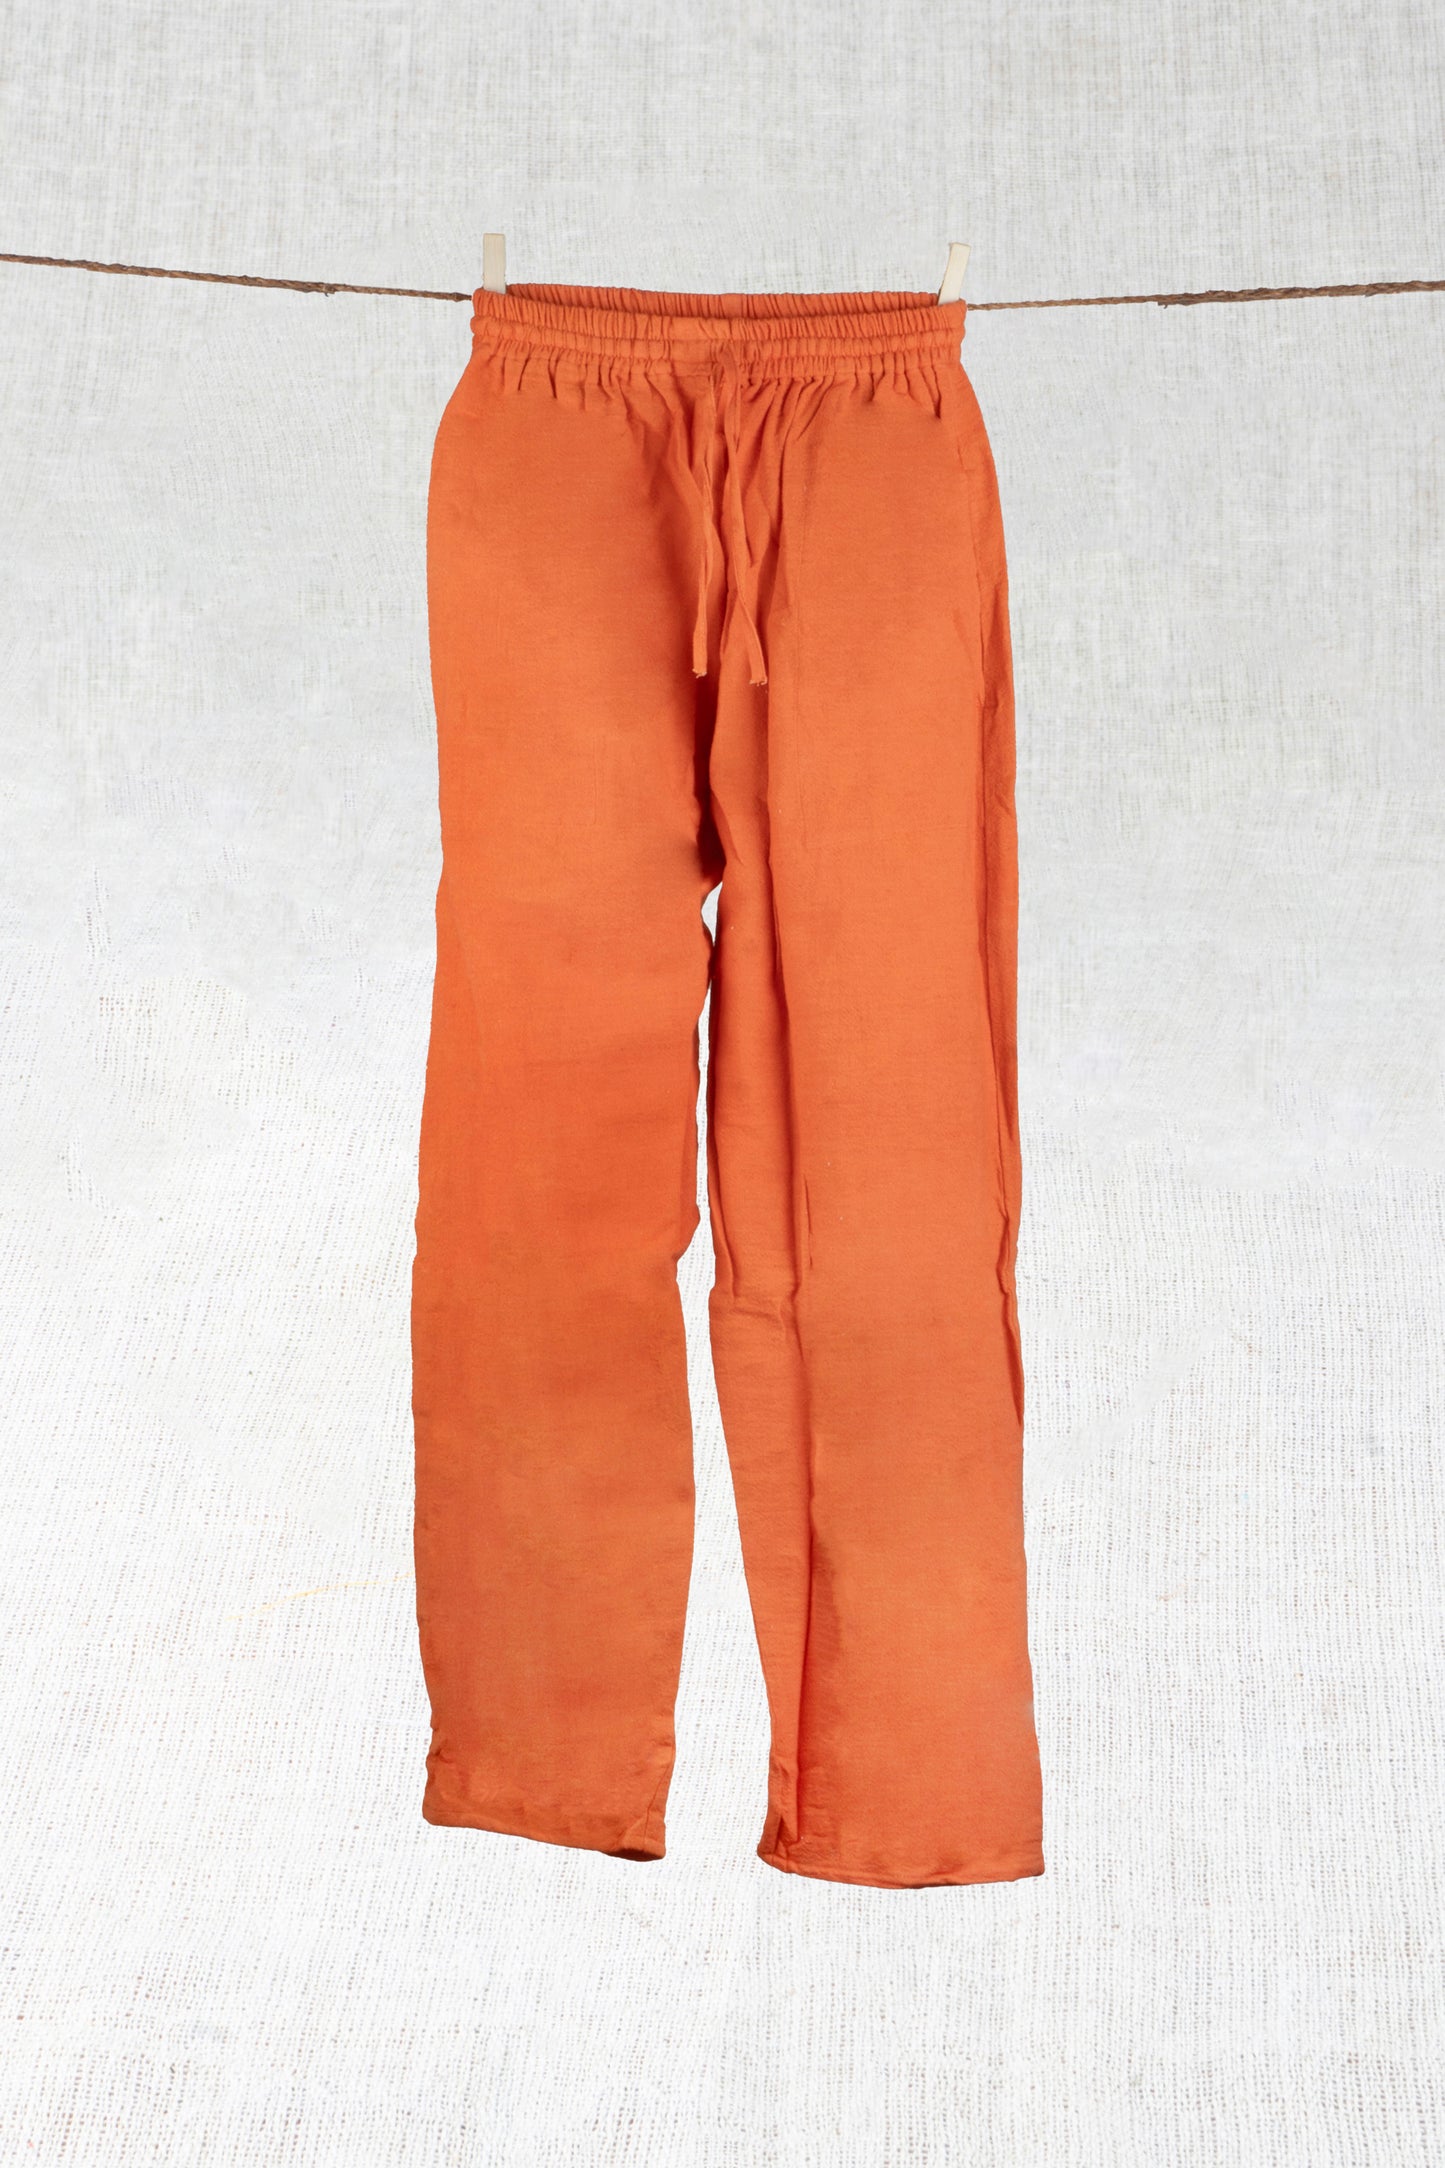 Rustic Saffron Hemp Pants